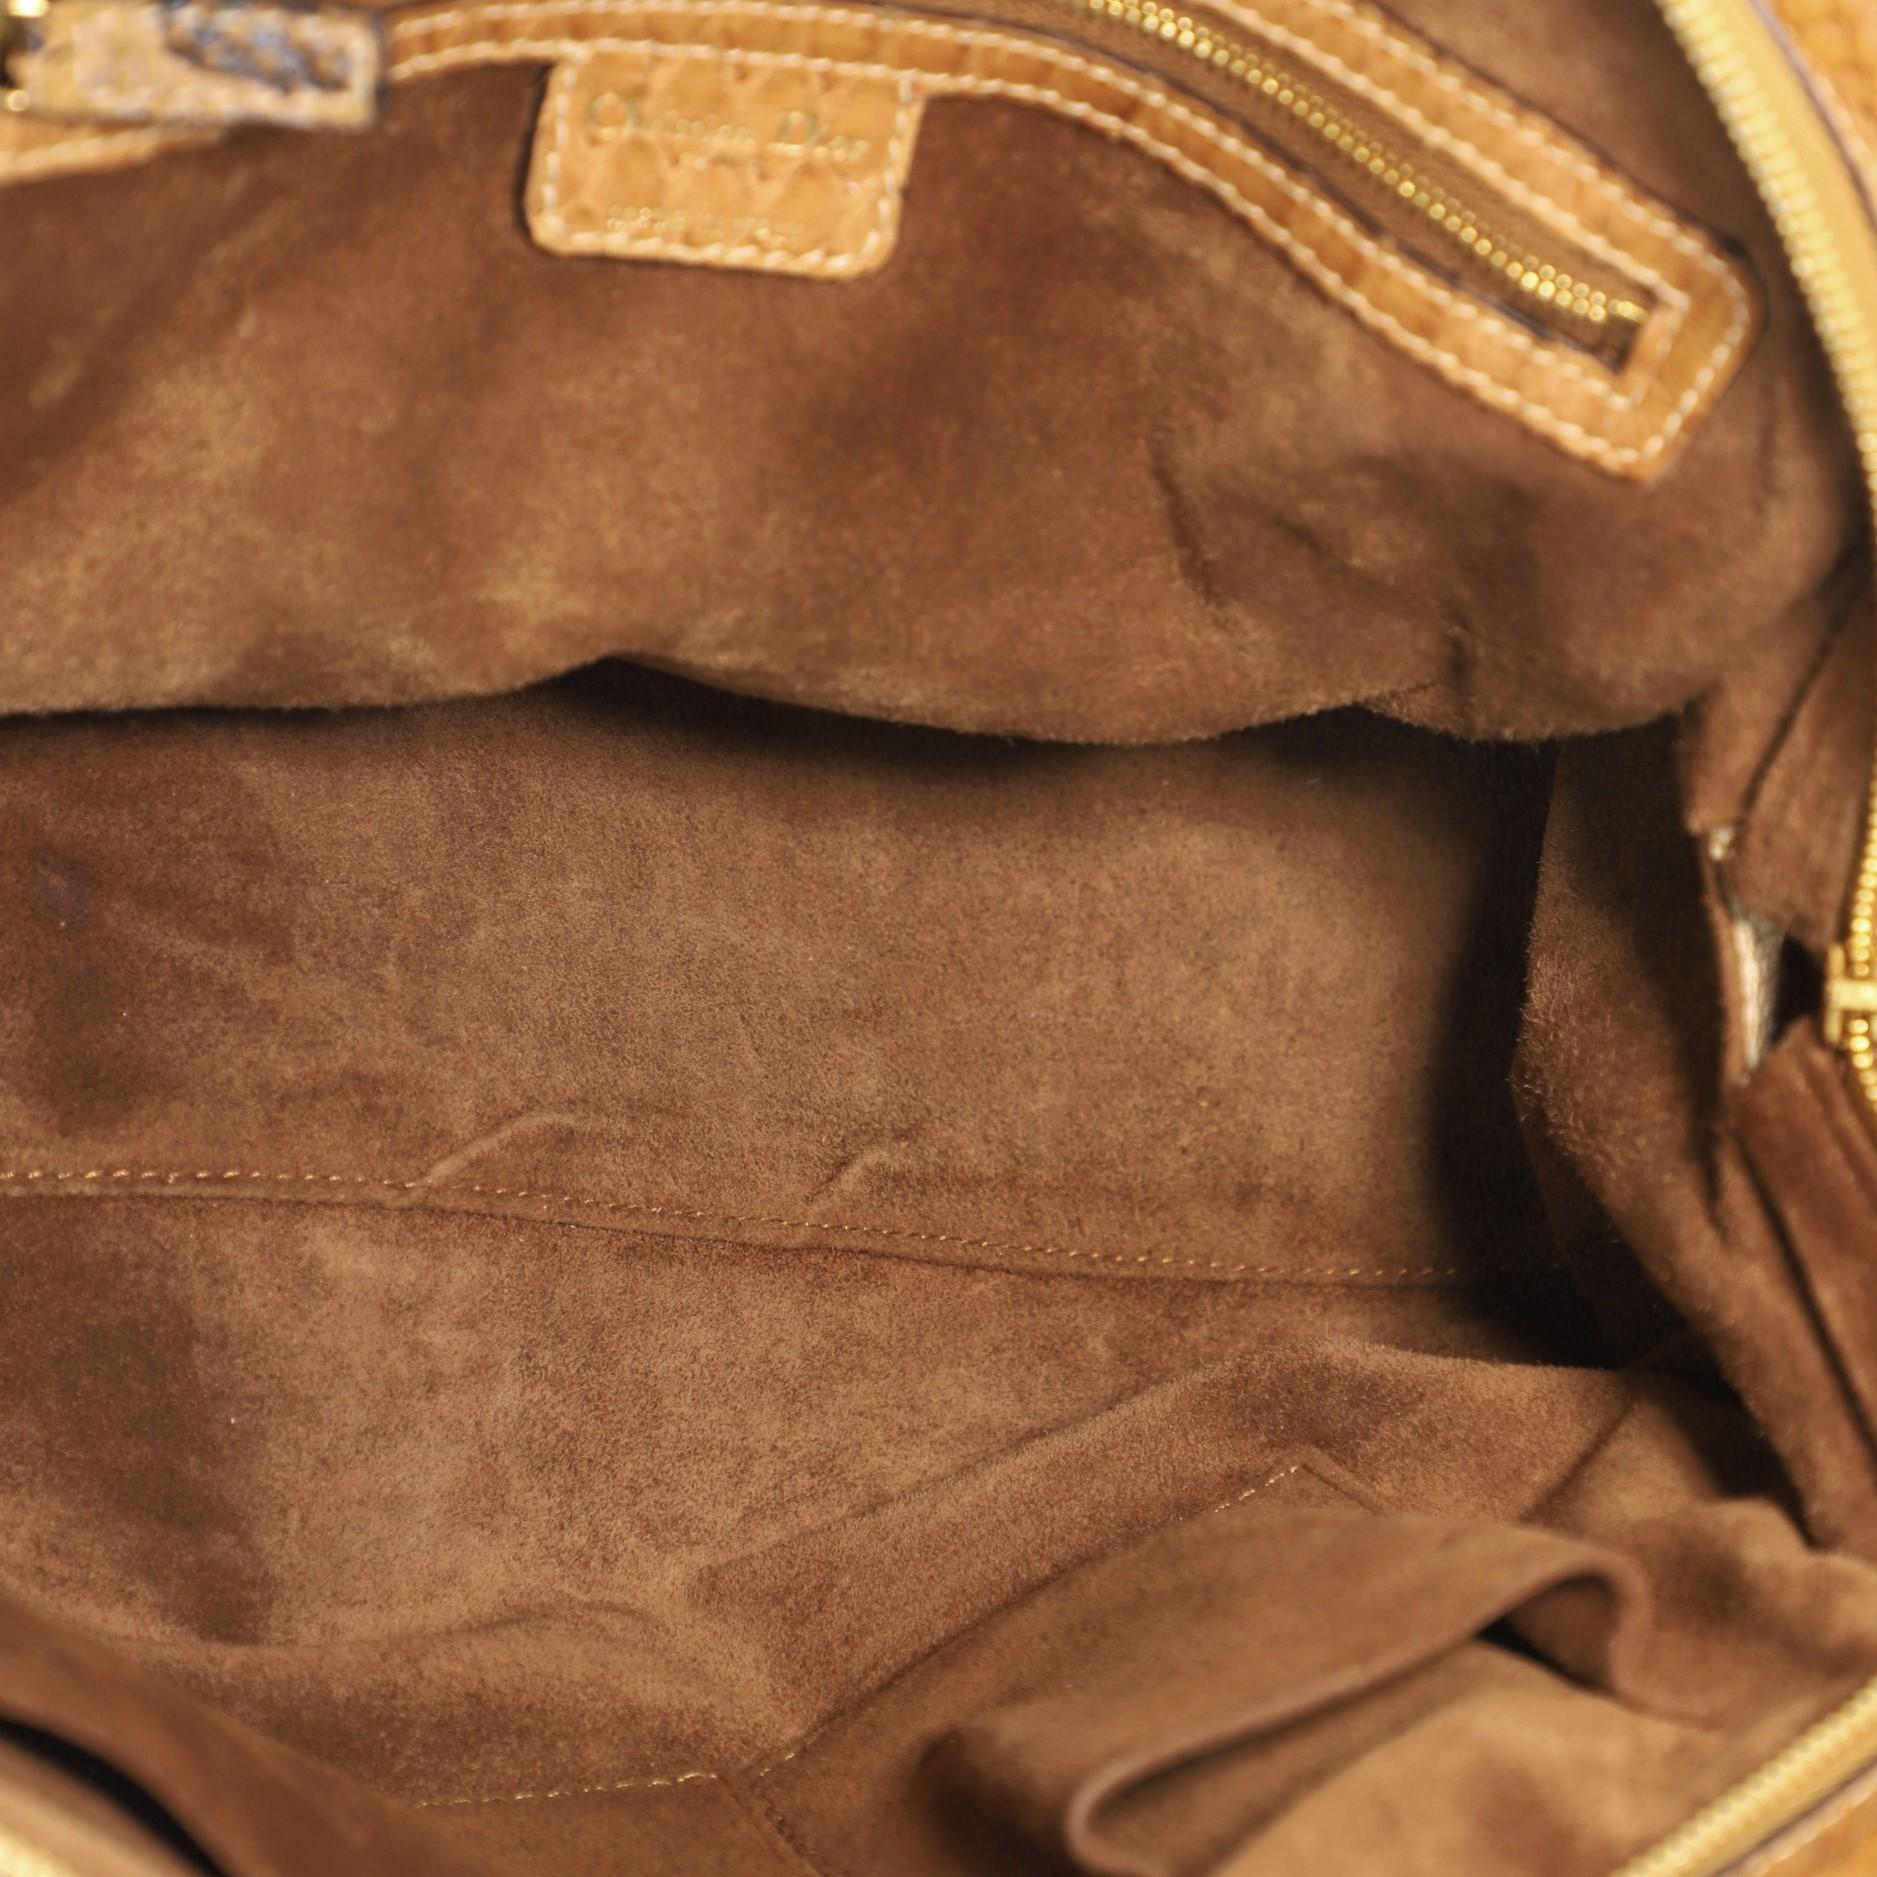 Beige Christian Dior Vintage Double Pocket Bowler Bag Canvas with Python Medium